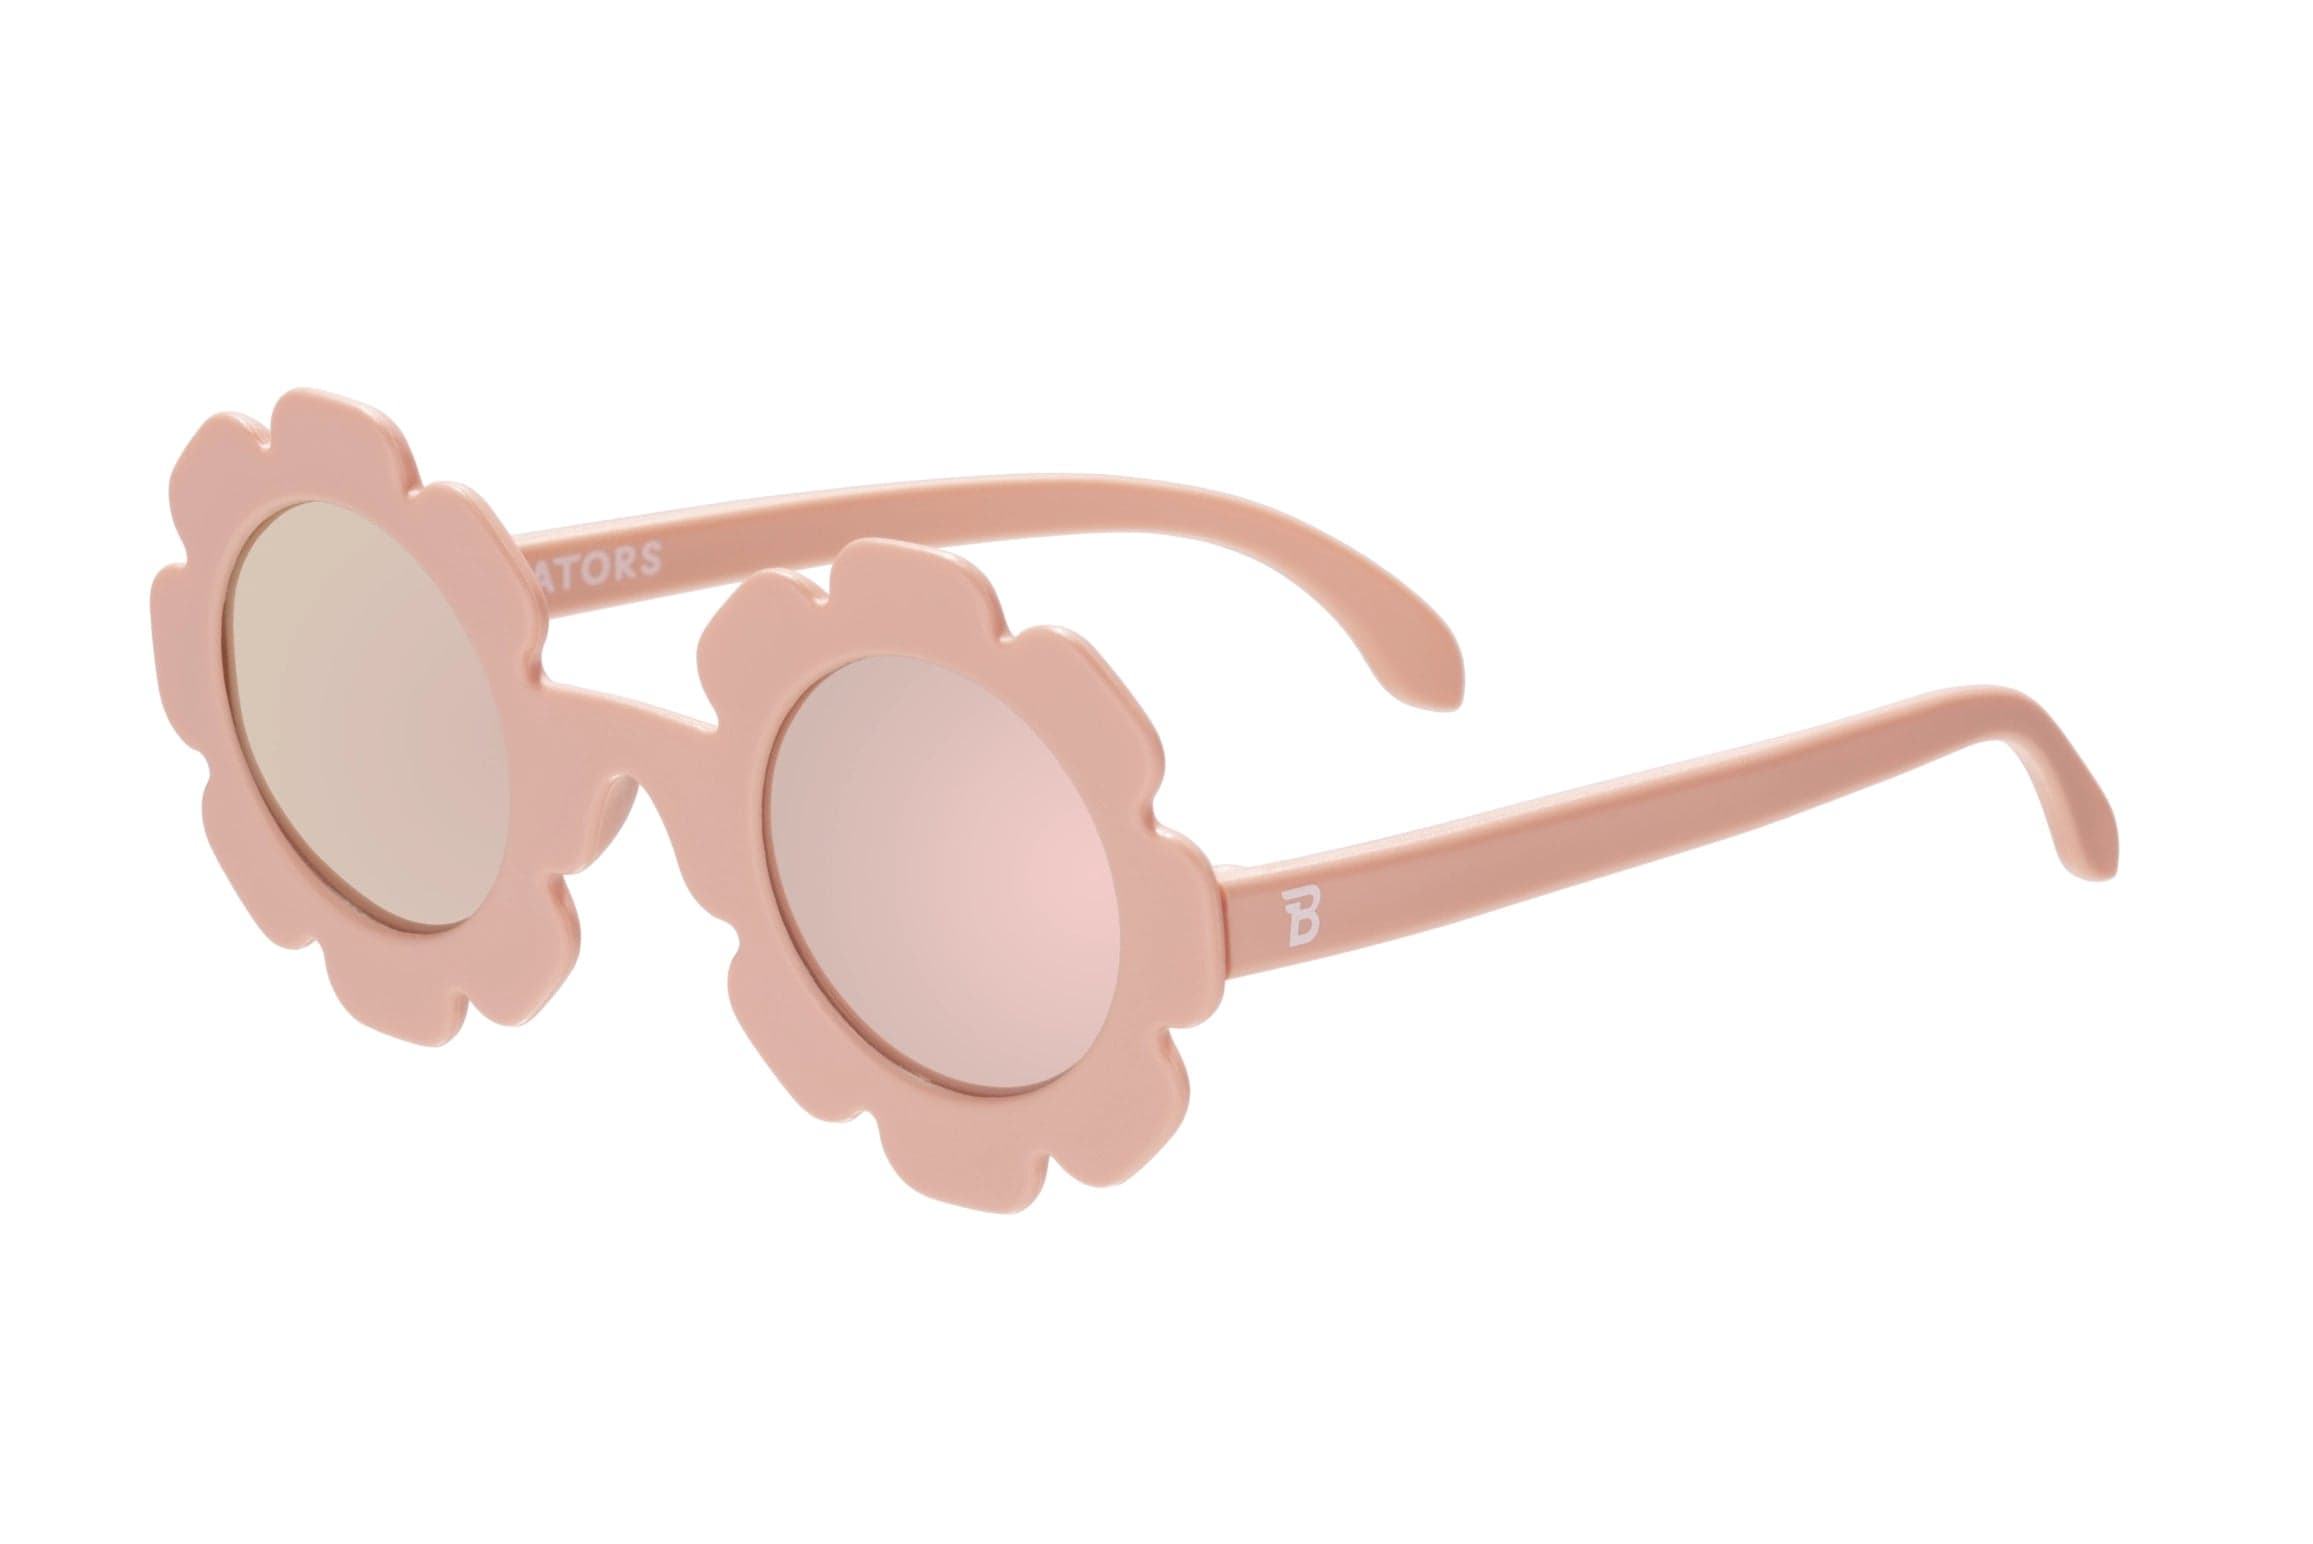 Peachy Keen - Polarized Lense Flower Sunglasses Babiators Lil Tulips